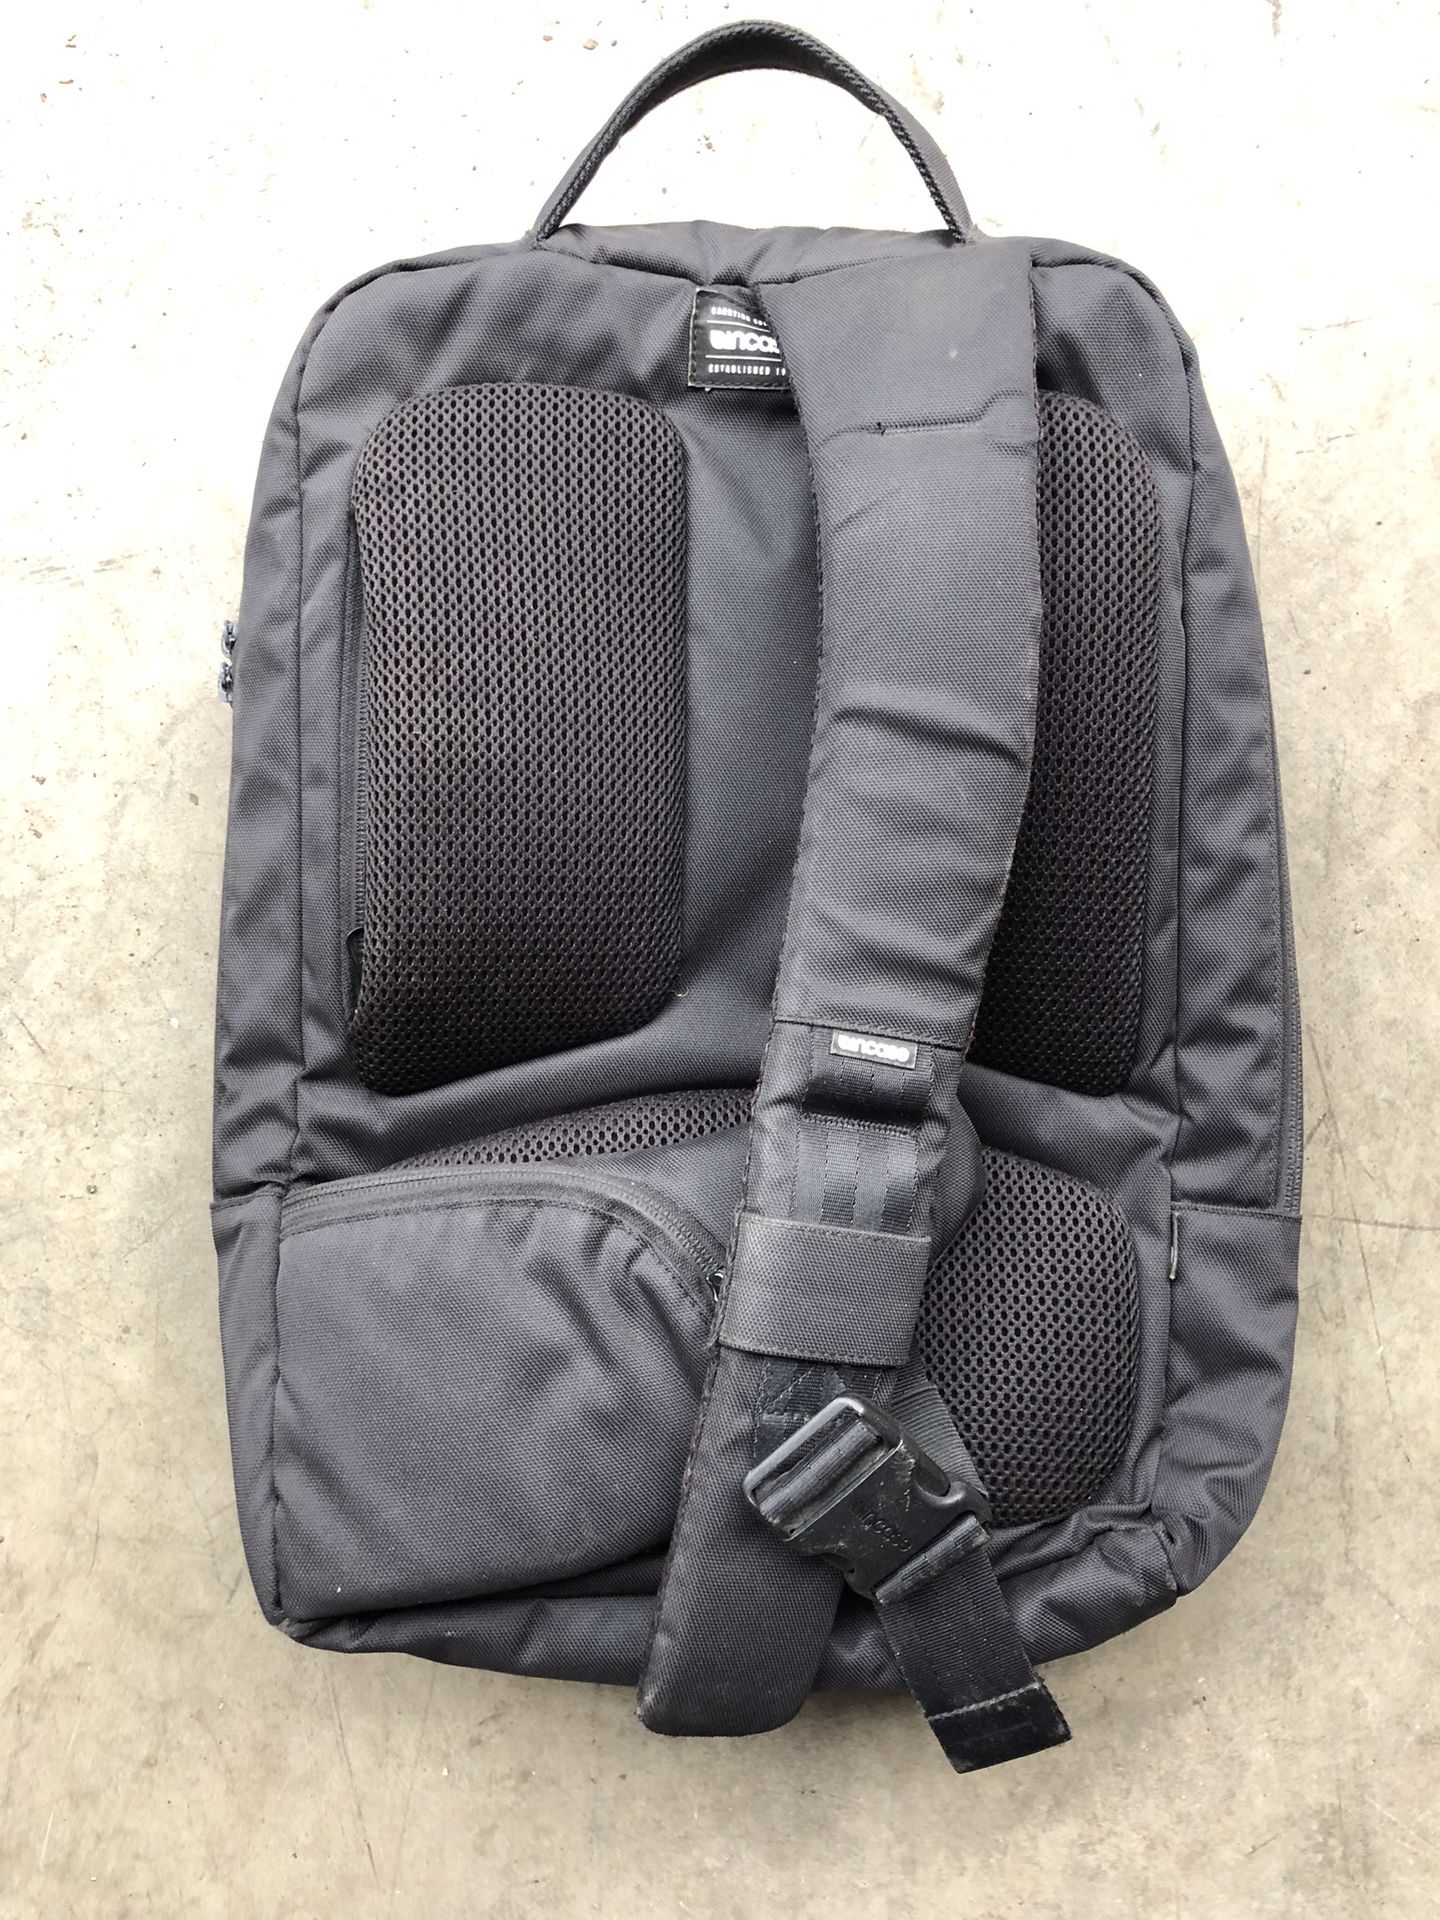 Incase Slim laptop backpack bag with padded sleeve.